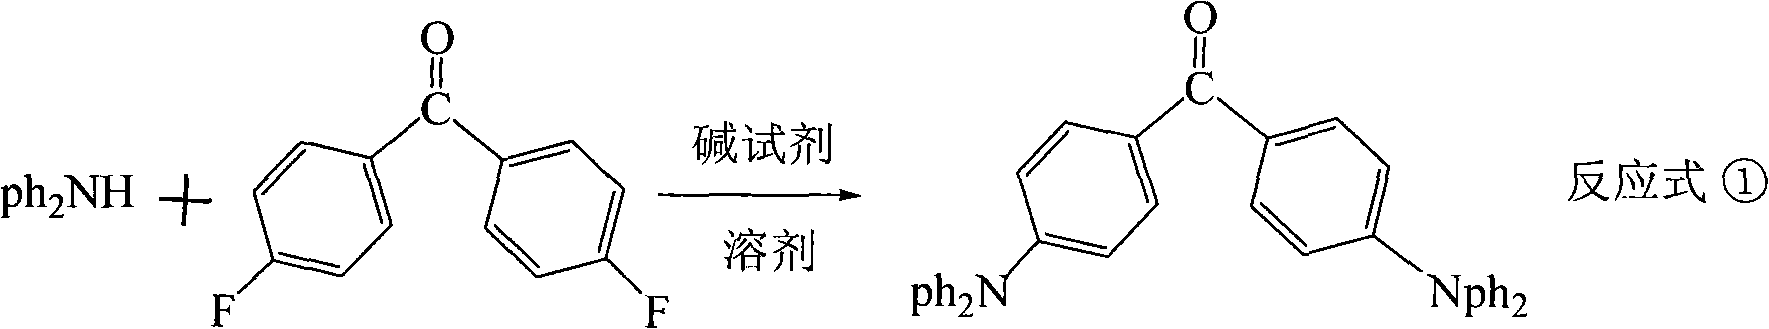 Triphenylethylene compound containing cyanogen and preparation method thereof